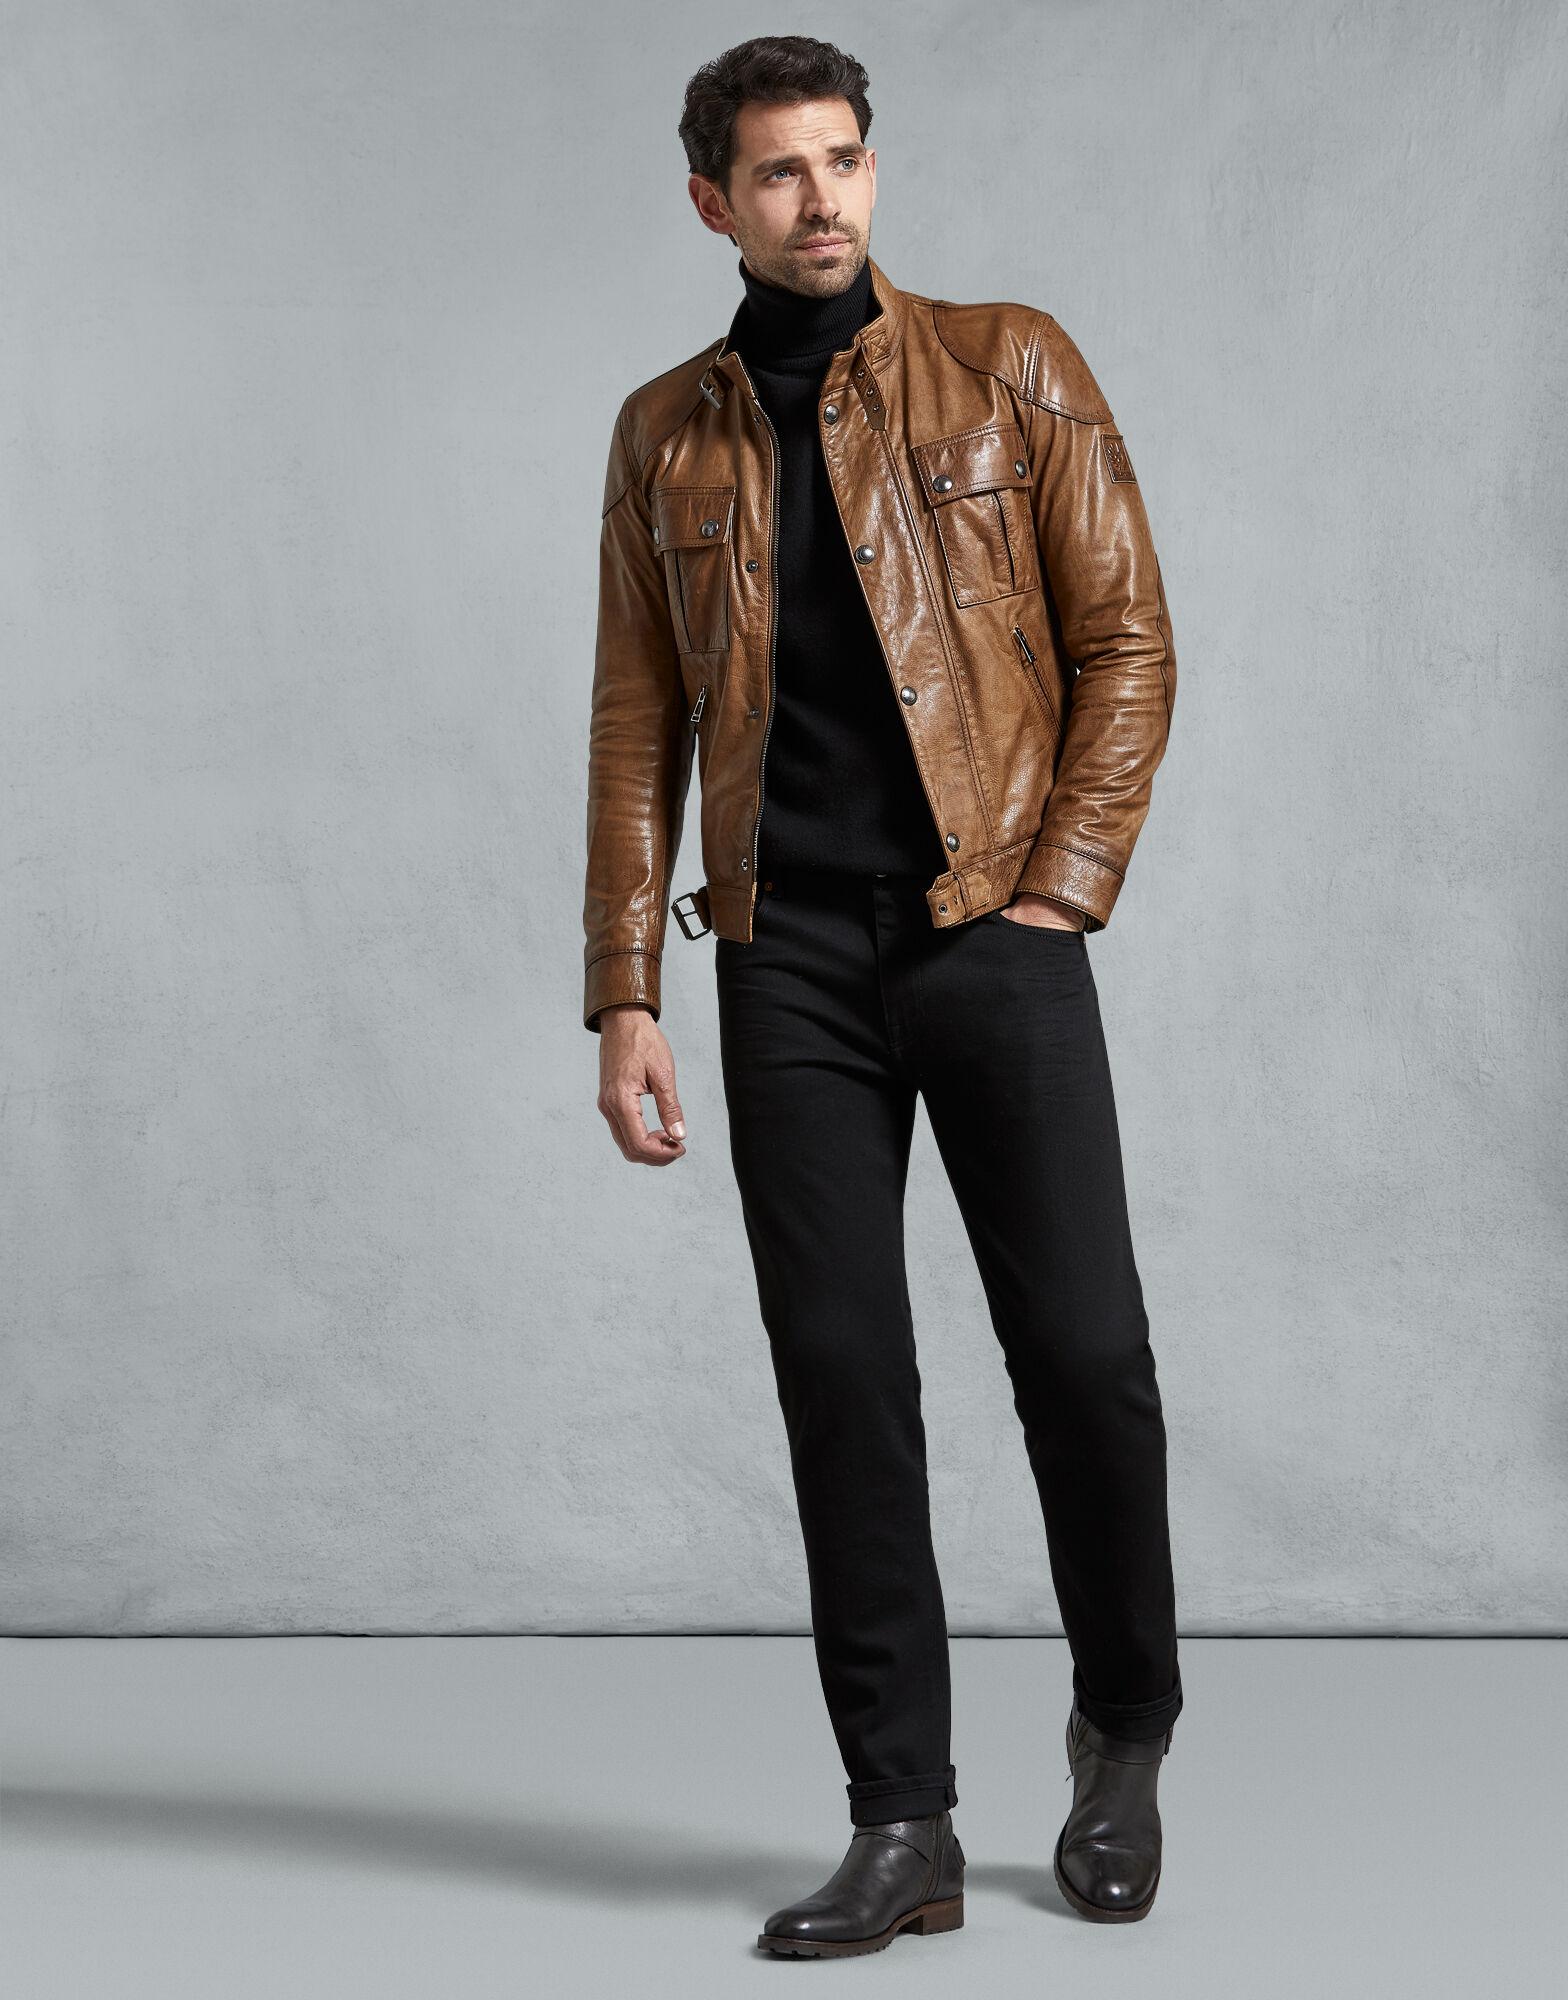 Belstaff Gangster Leather Jacket in Tan (Brown) for Men - Lyst